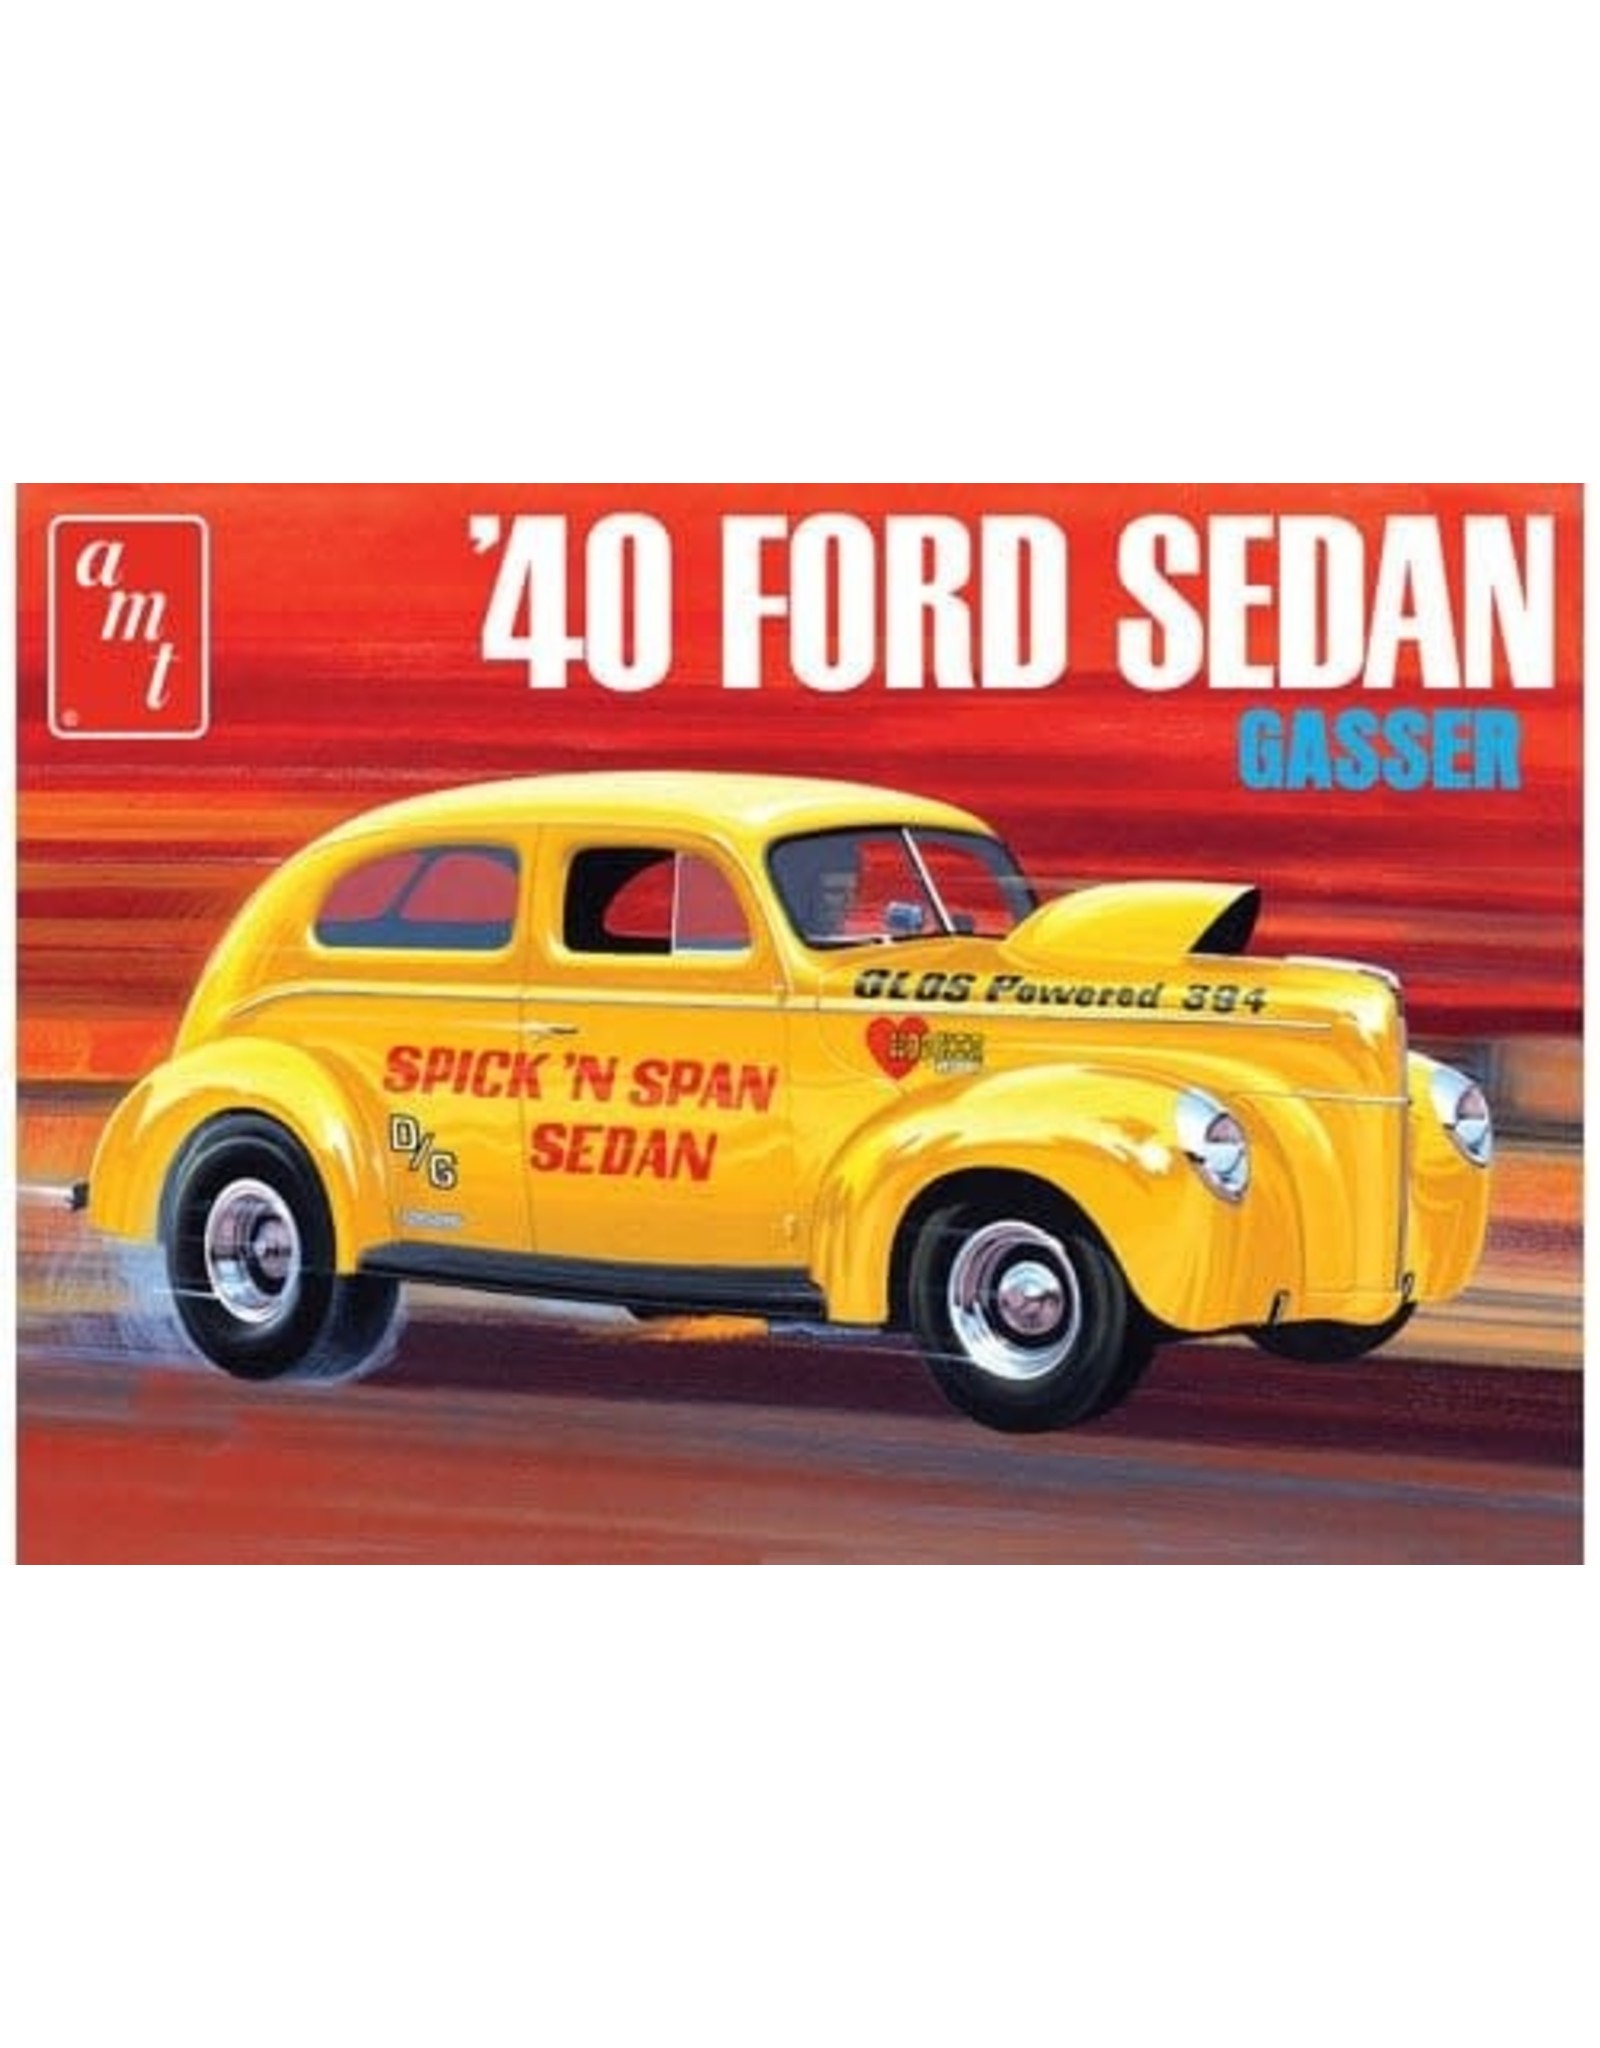 amt '40 Ford Sedan gasser